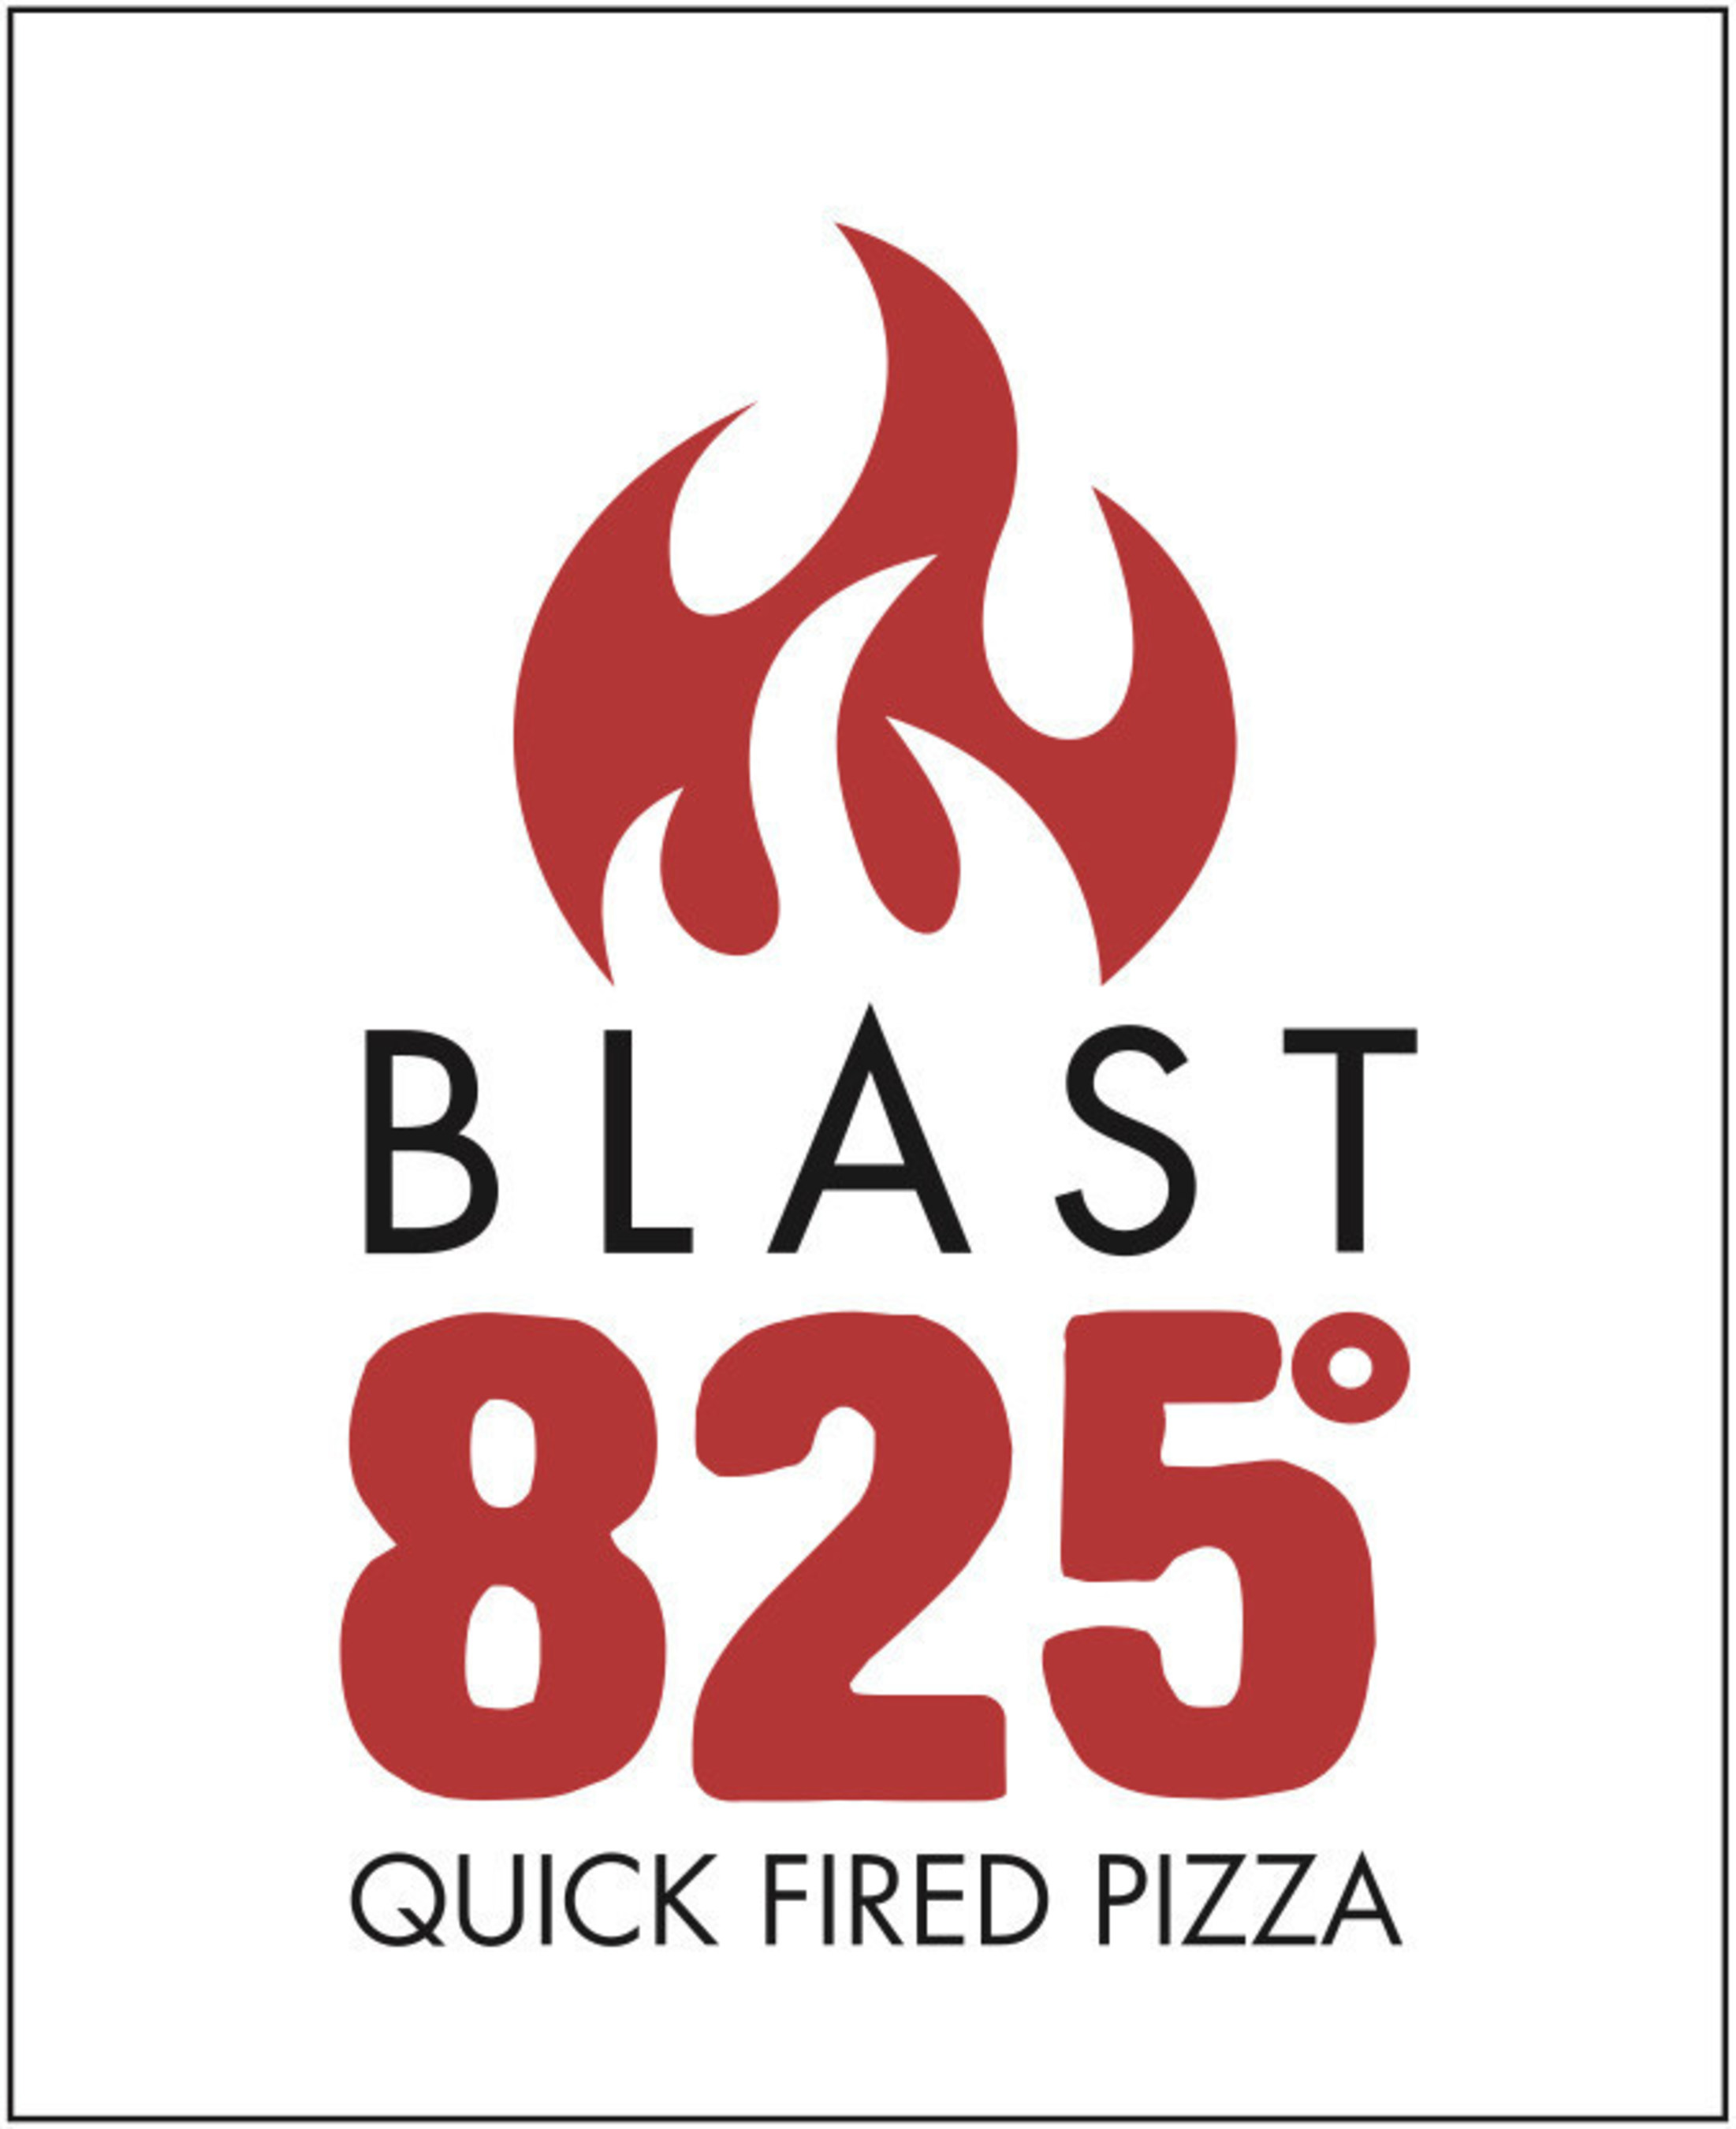 Blast 825 logo